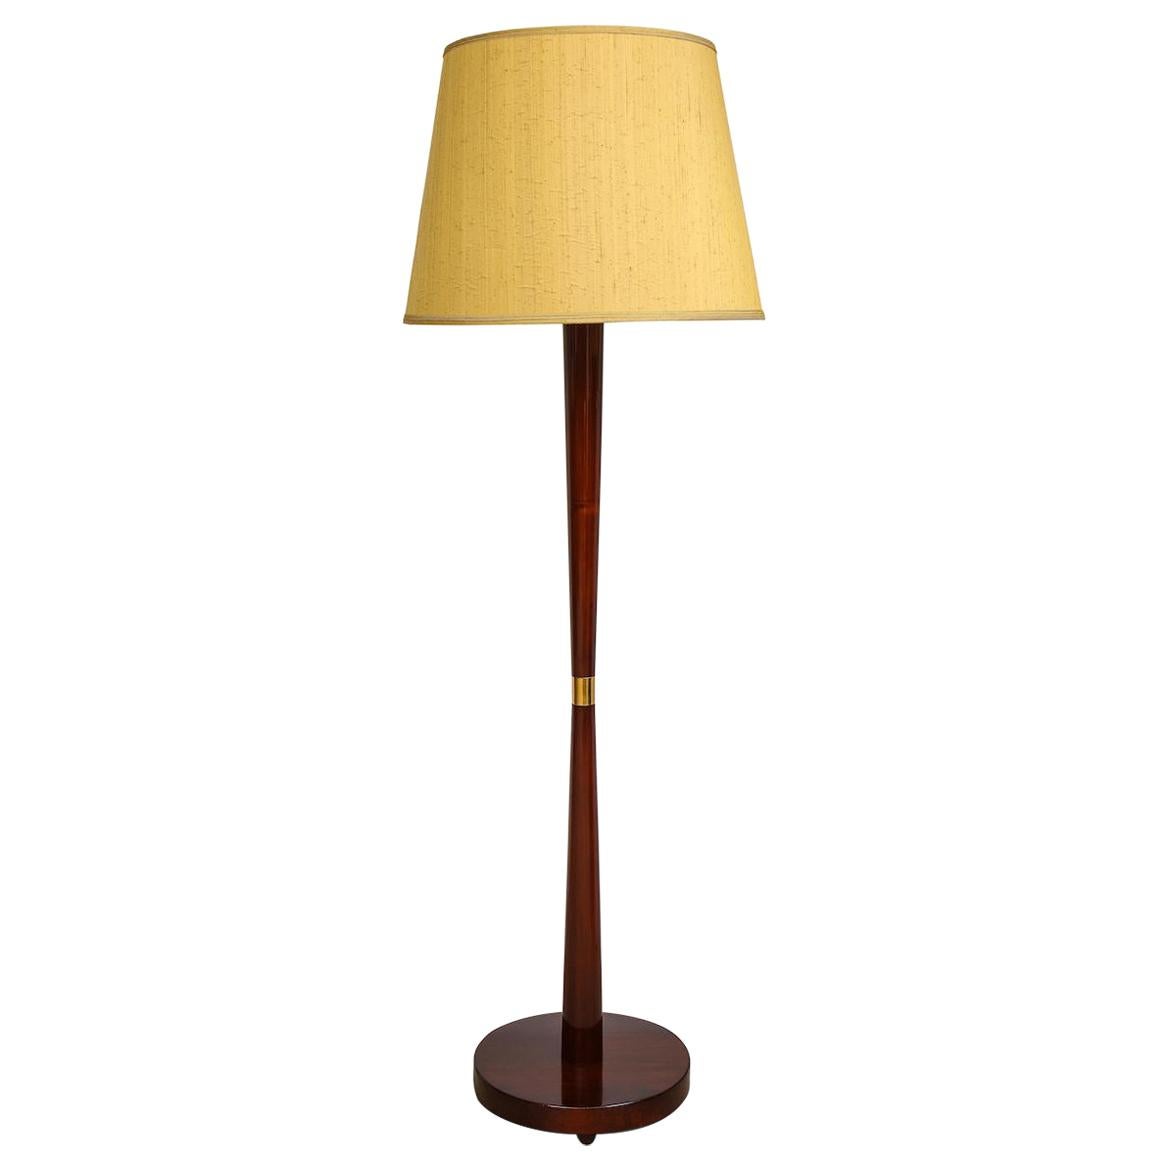 Elegant French Floor Lamp